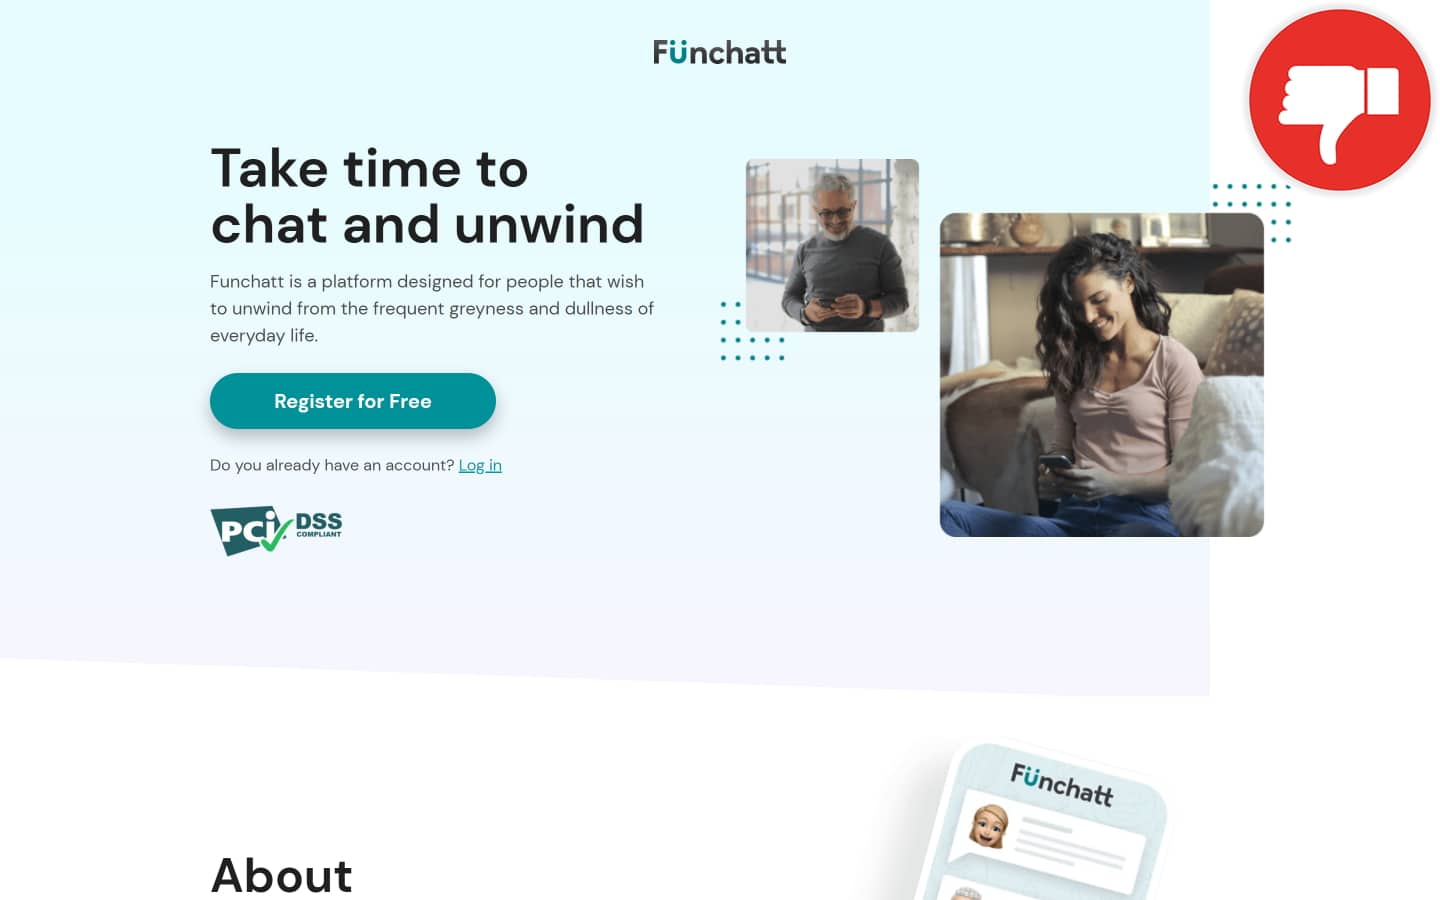 Review FunChatt.com scam experience